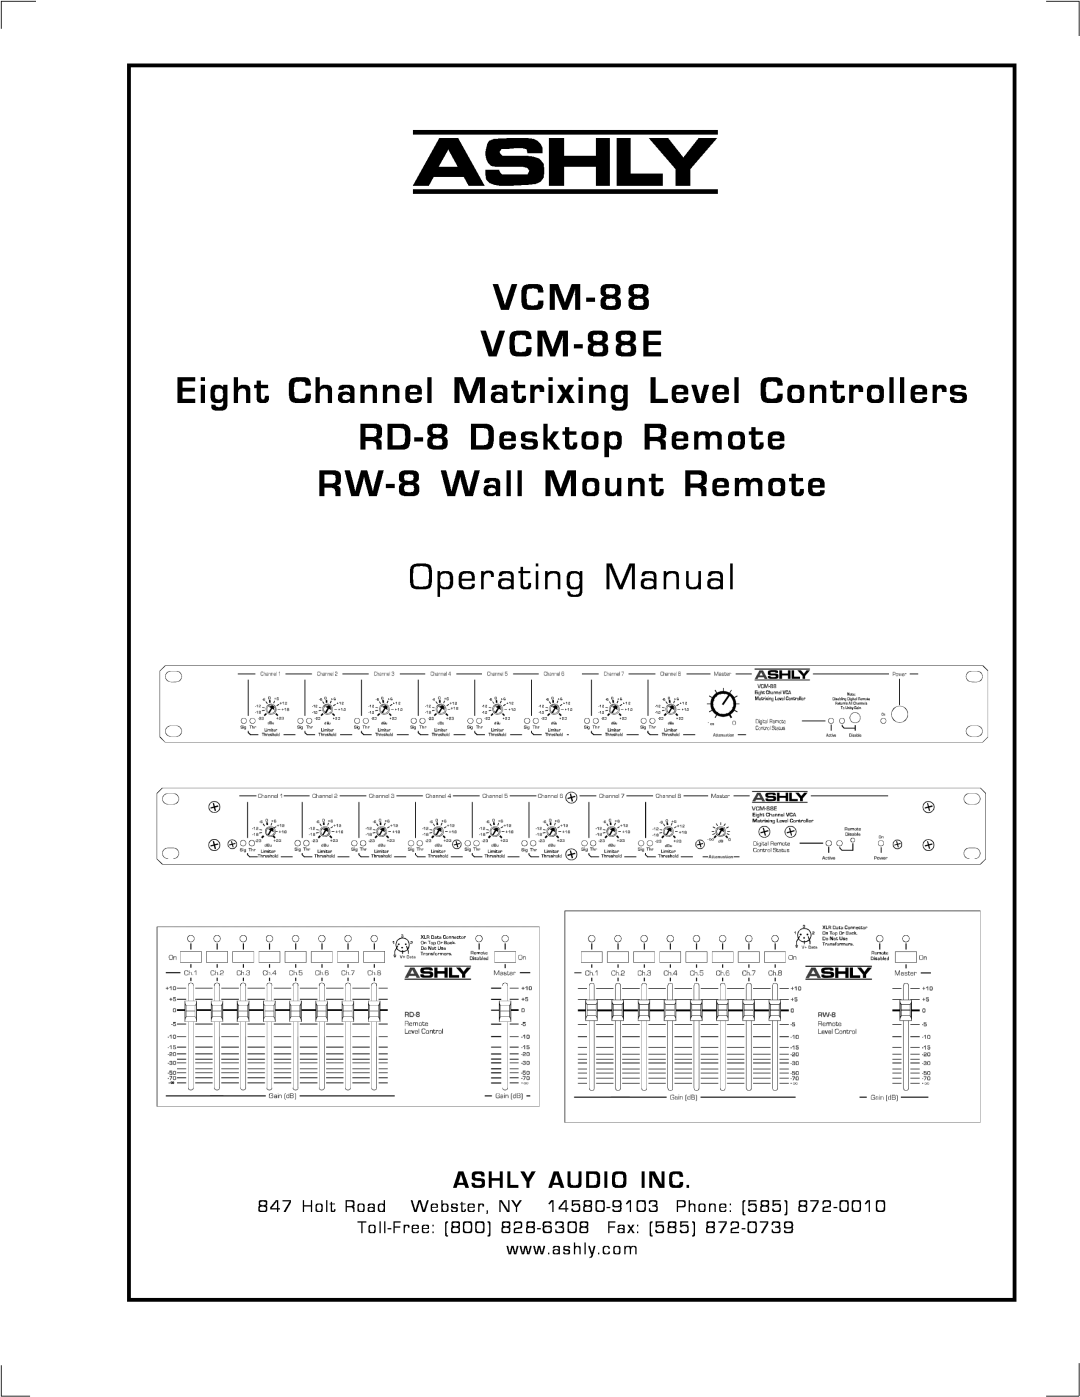 Ashly VCM-88E manual Ashly Audio Inc, Holt Road Webster, NY 14580-9103 Phone 585, Toll-Free 800 828-6308 Fax, Gain dB 